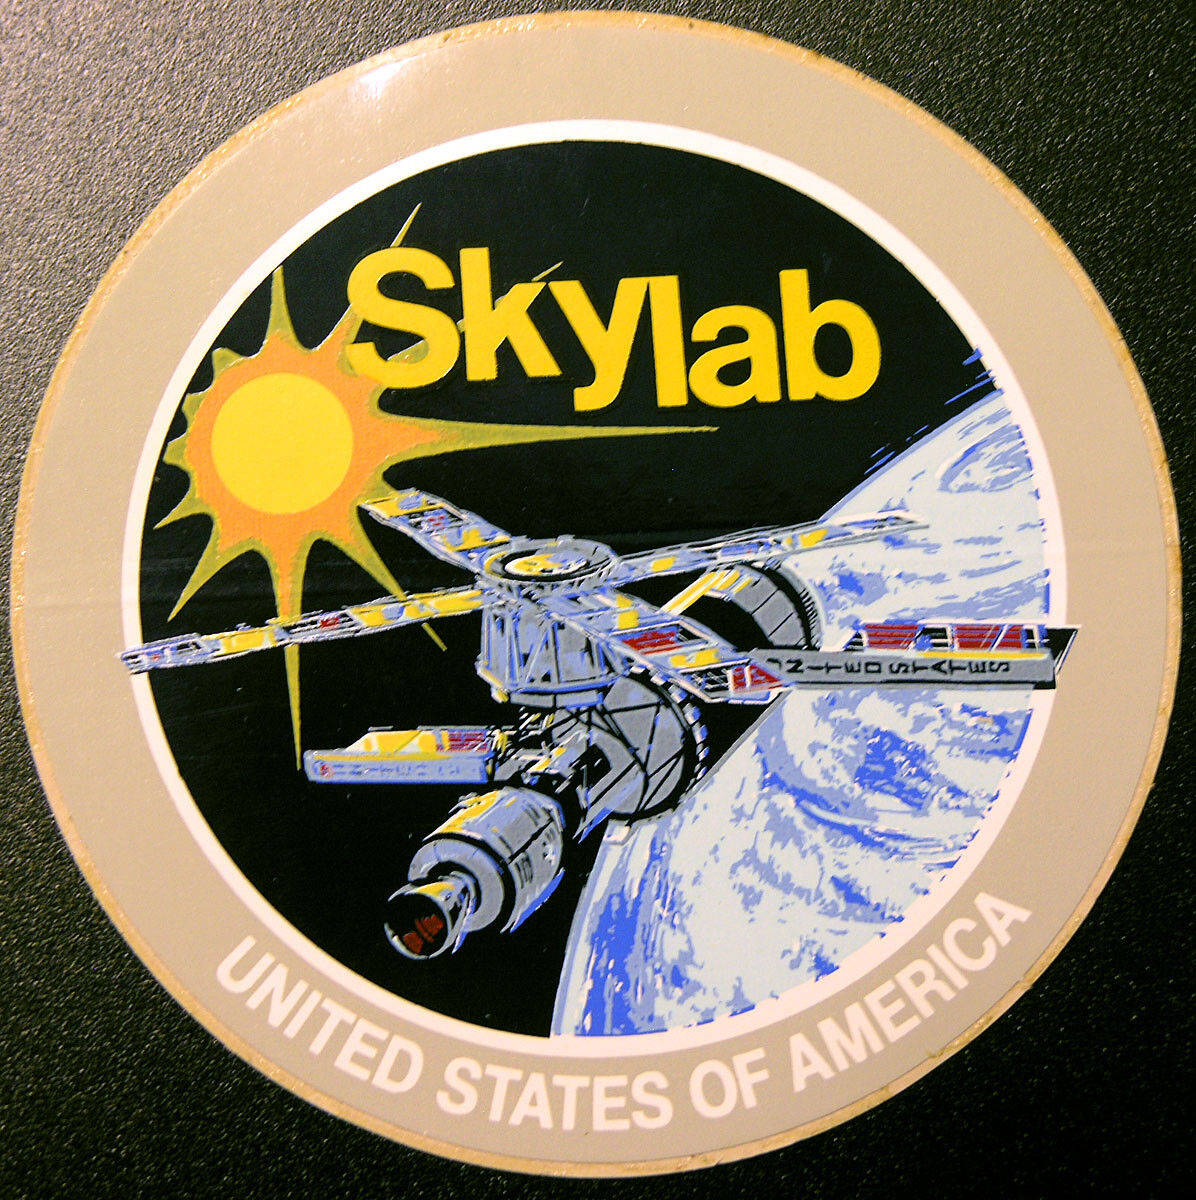 Vintage NASA Skylab mission seal sticker - 1970s USA space station decal